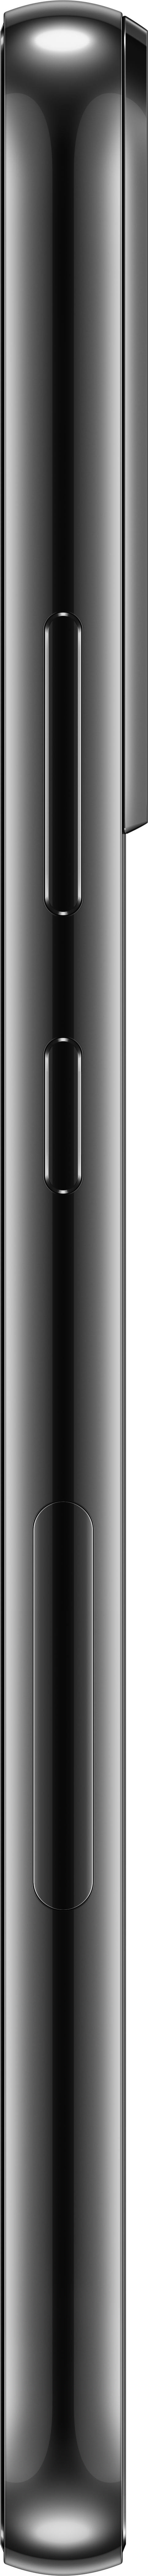 Samsung - Galaxy S22+ 128GB (Unlocked) - Phantom Black_6